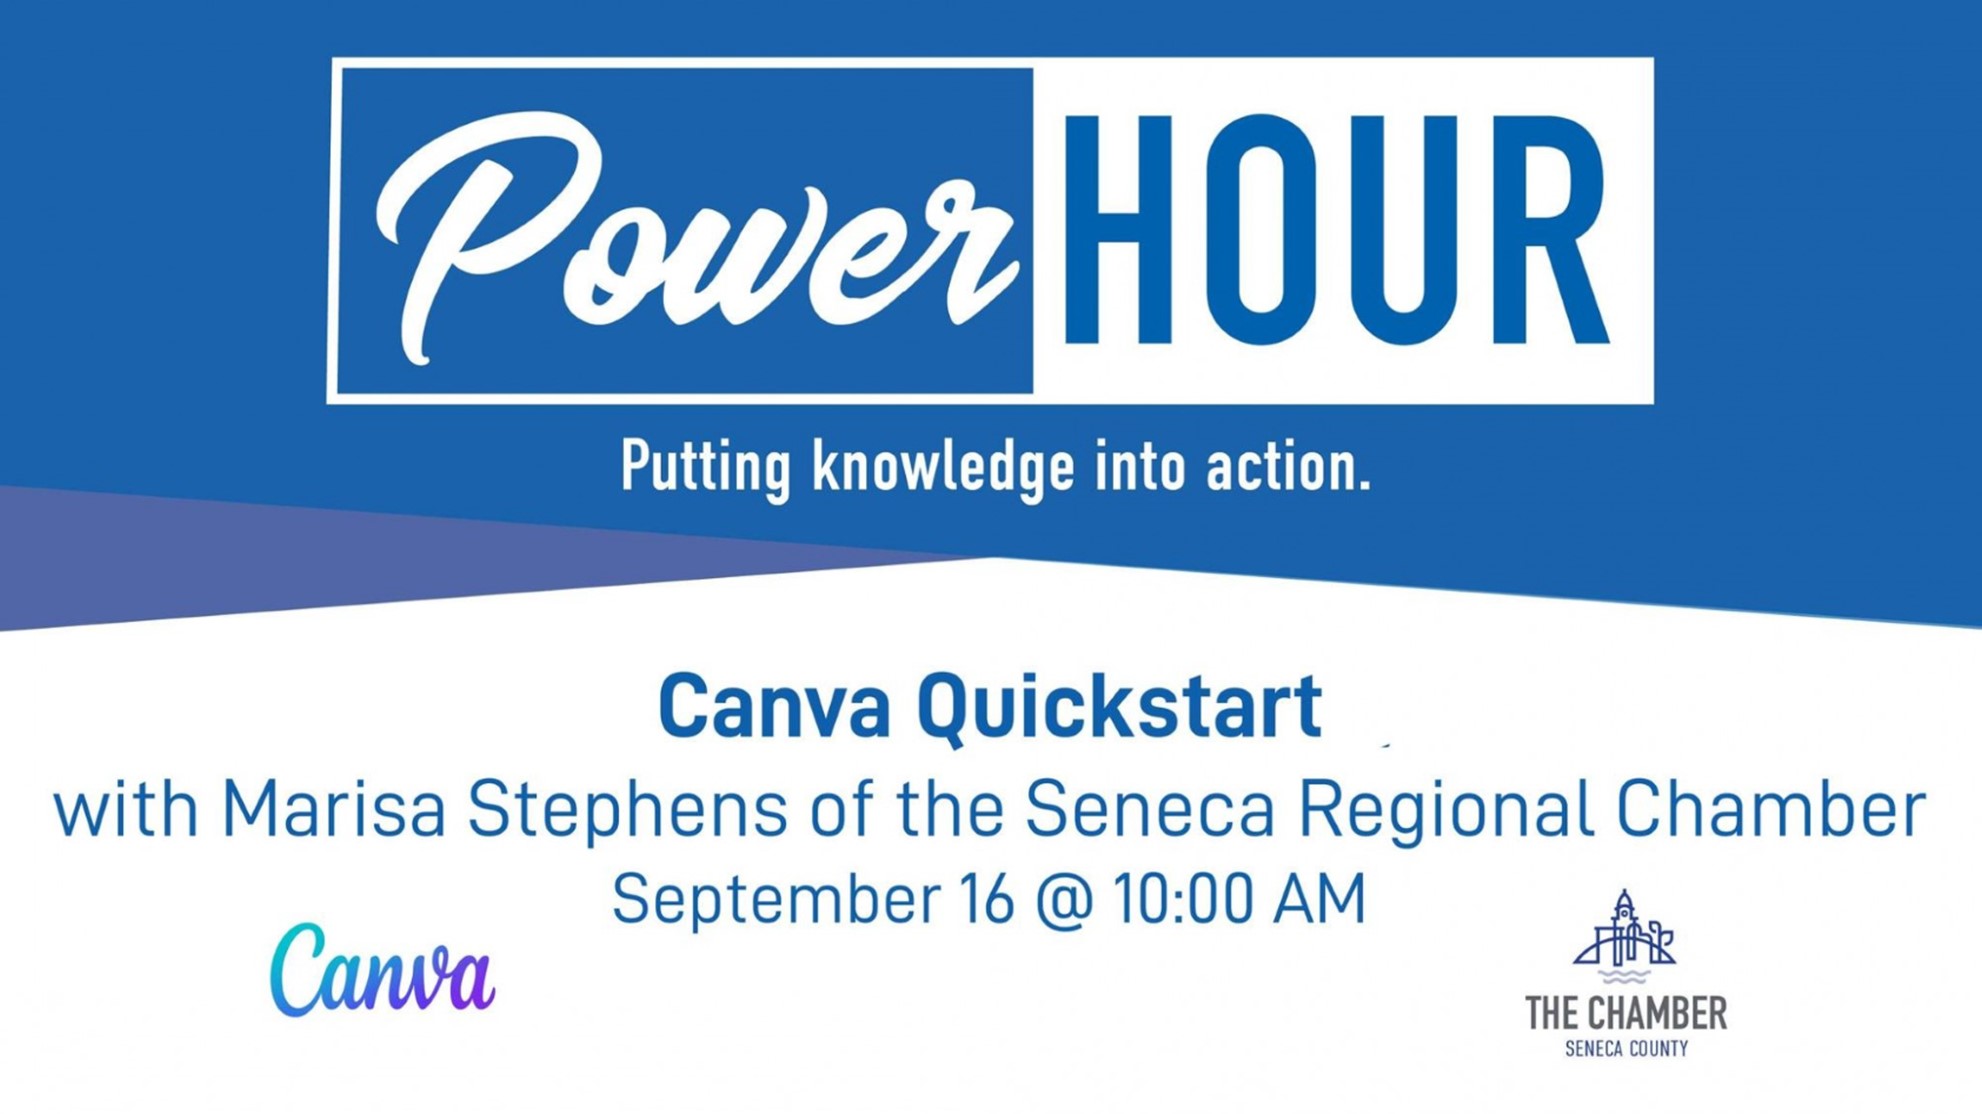 Seneca Regional Chamber: Power Hour | Canva Quickstart